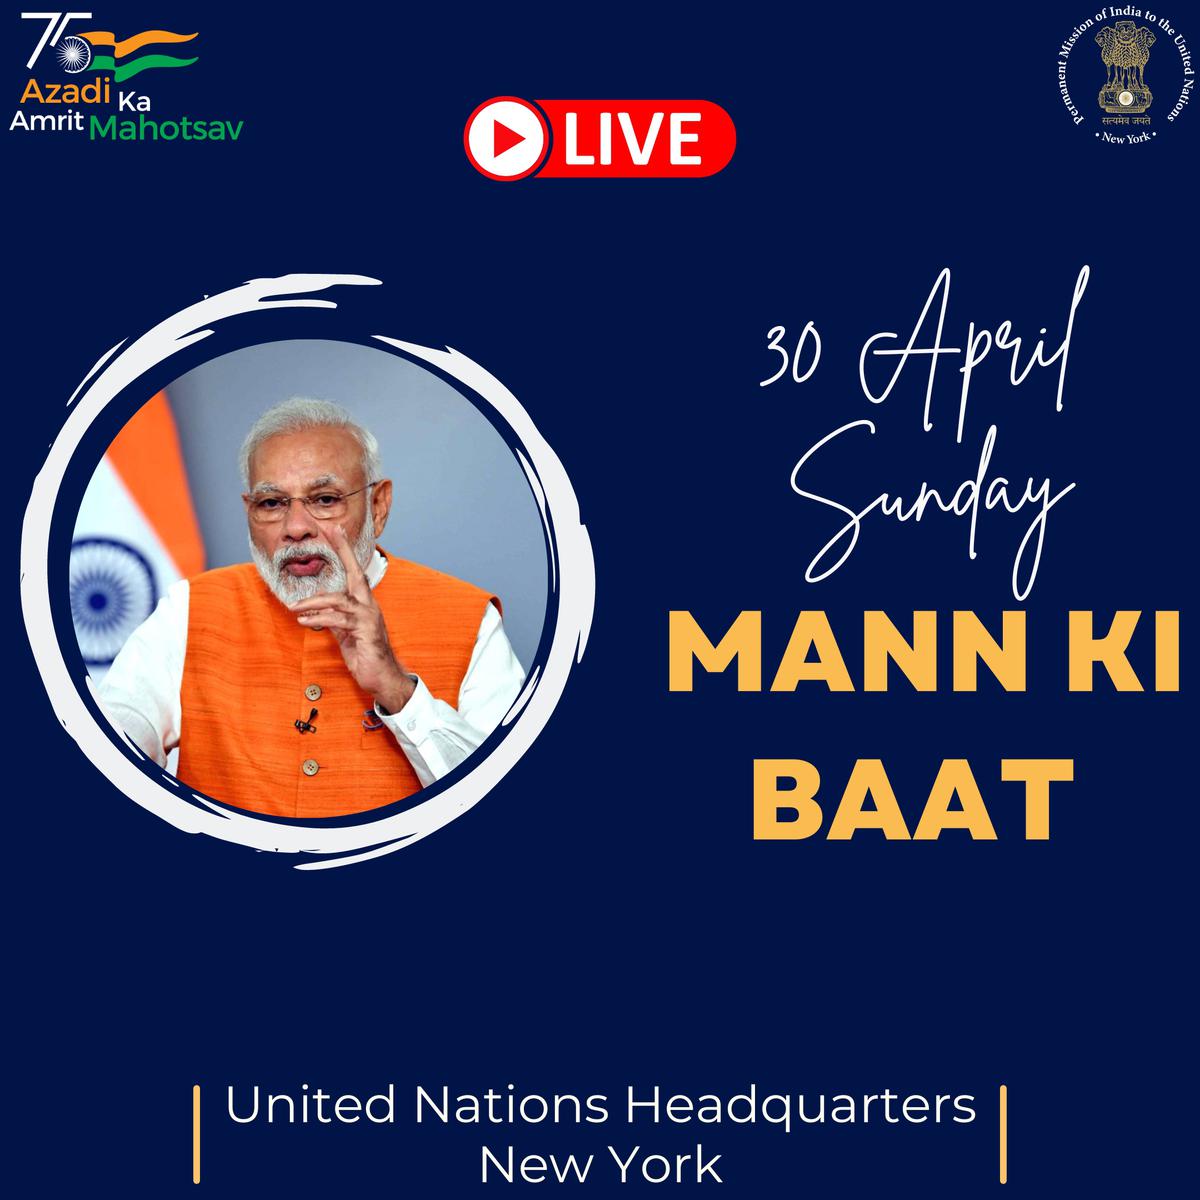 Mann Ki Baat 100th Episode: PM Modi addresses 100th episode of Mann Ki Baat; monthly radio programme goes global_50.1